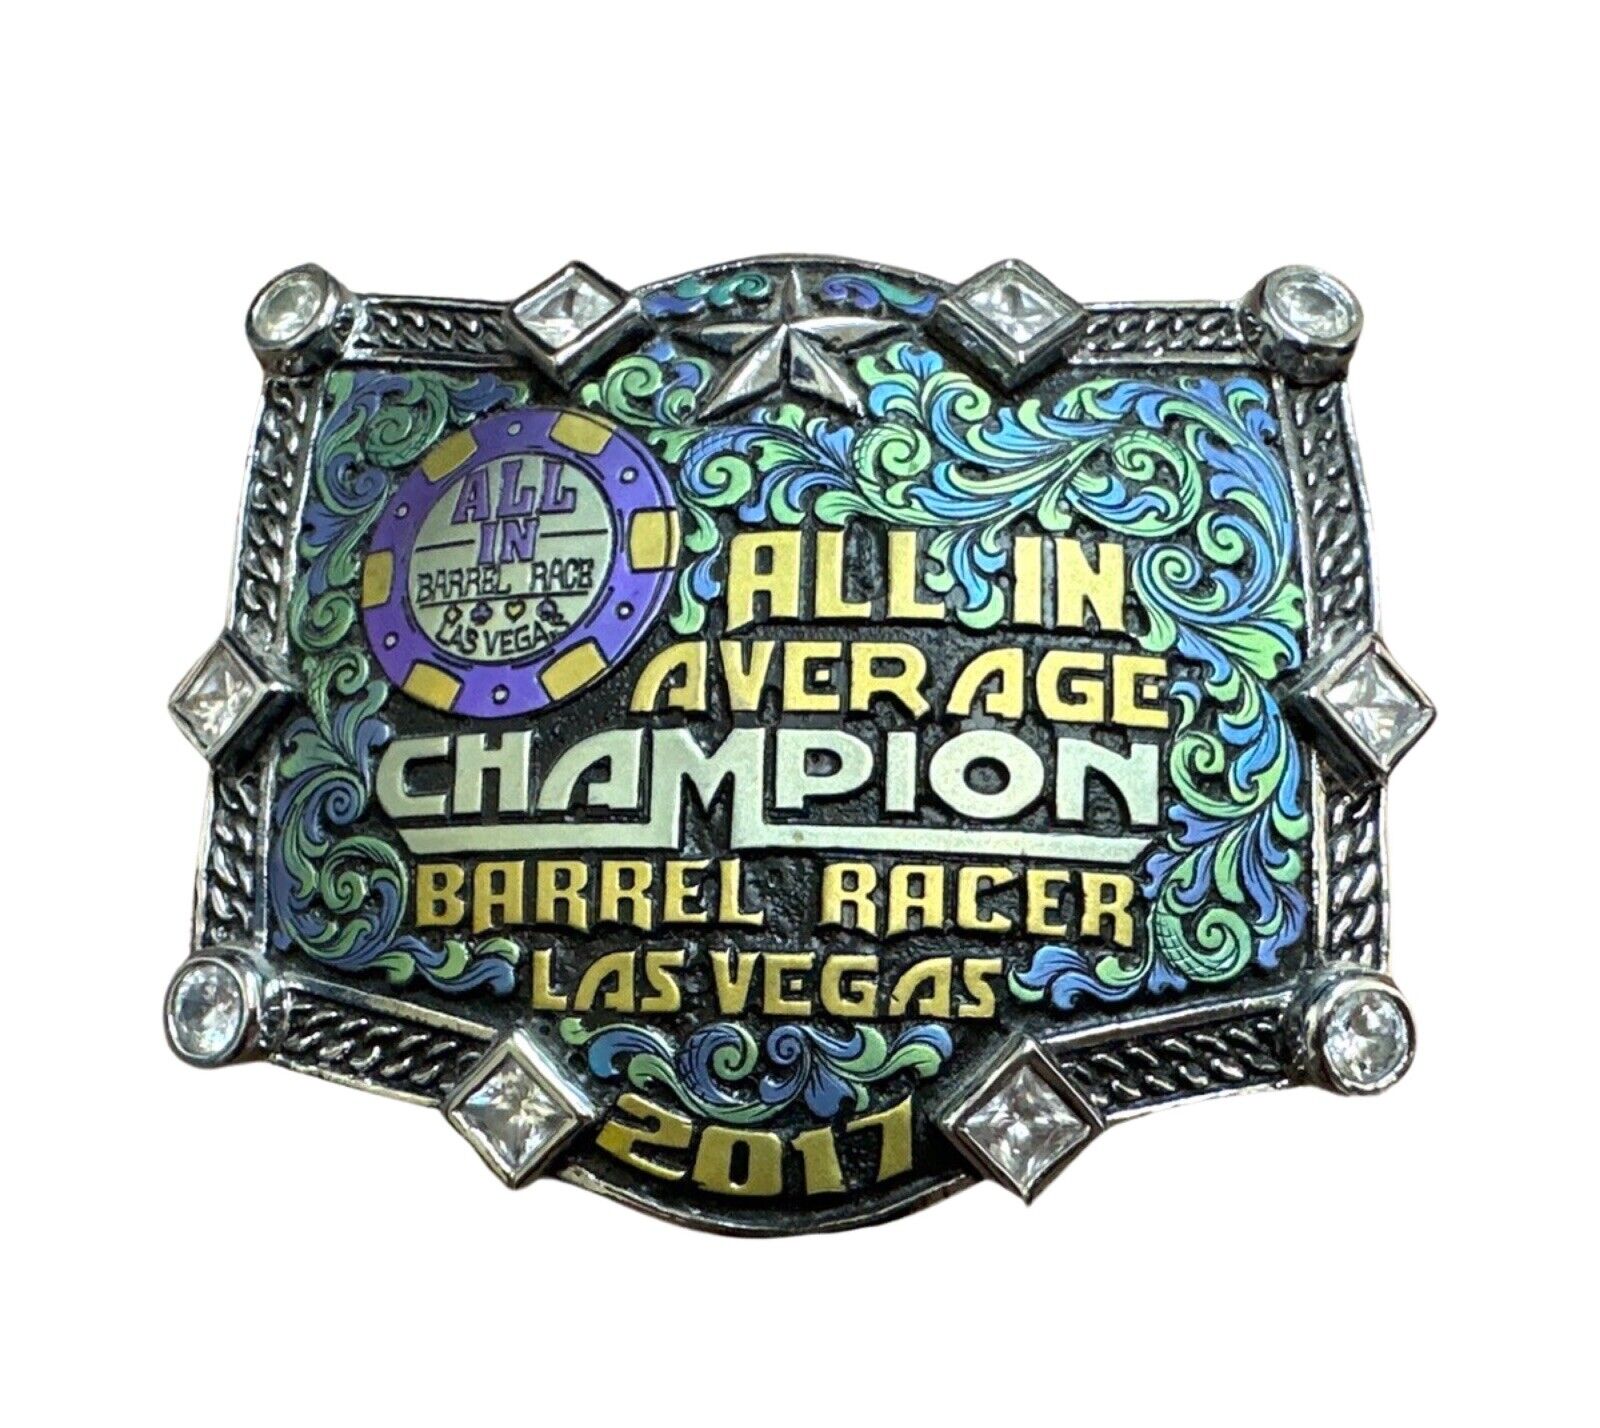 RARE Bob Berg Colorful All In Barrel Race Champion Las Vegas 2017 Belt Buckle